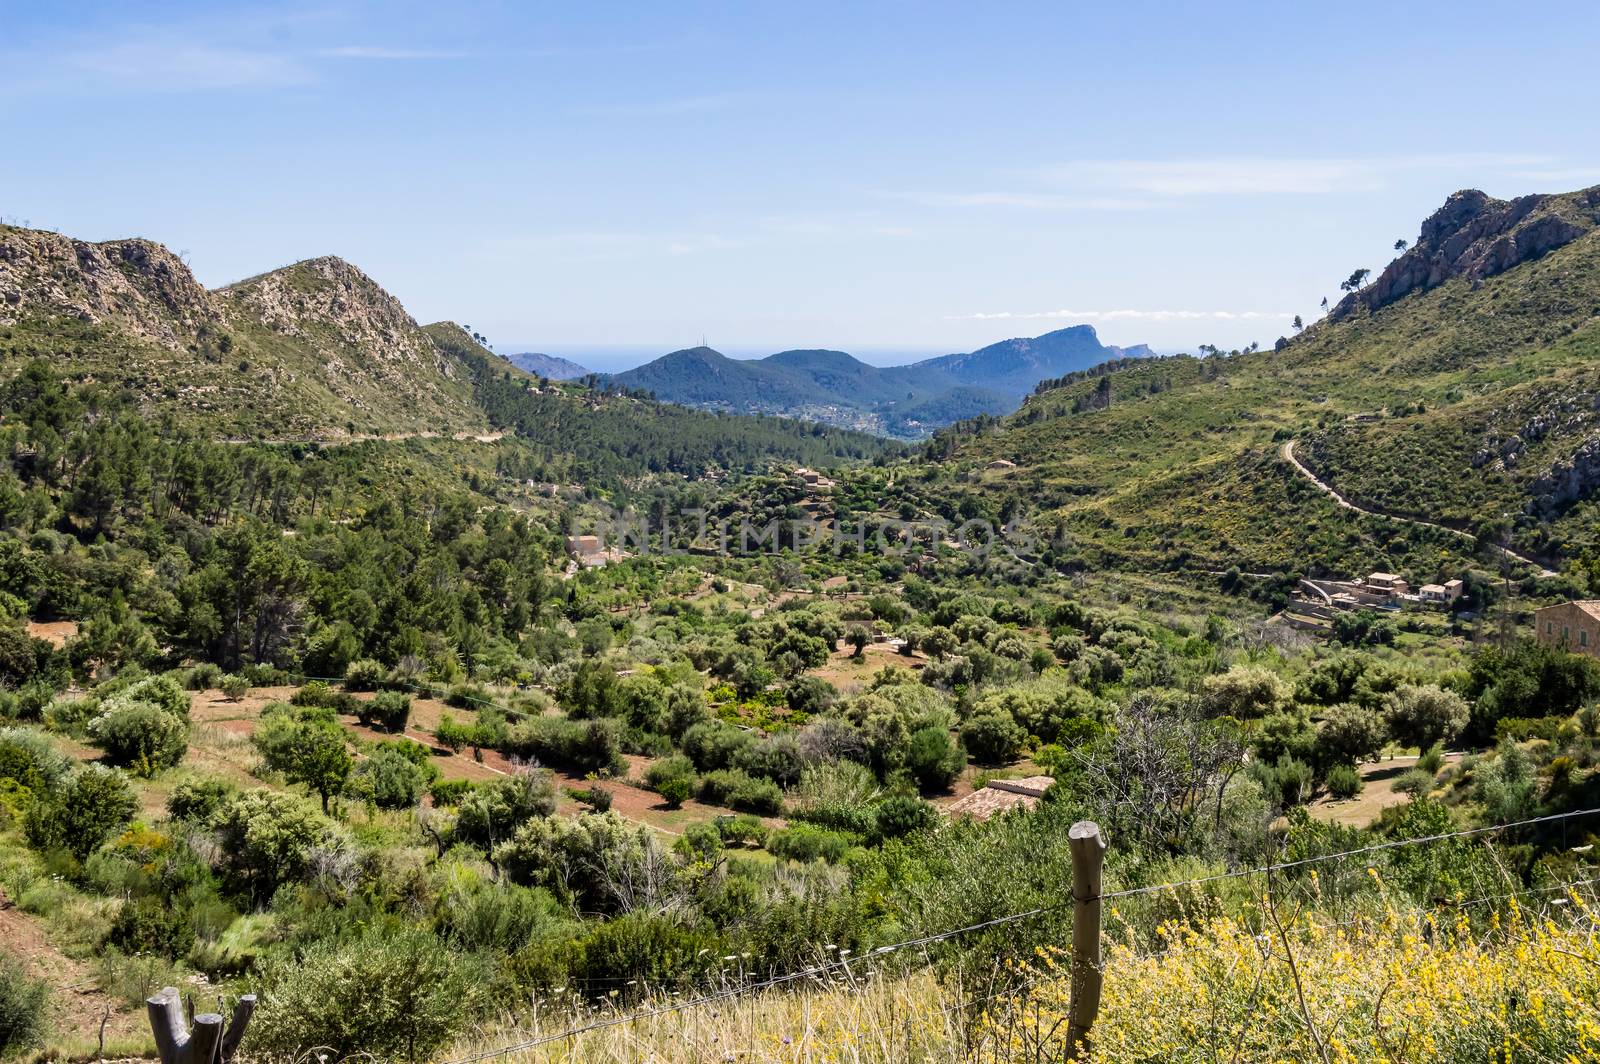 View of the road from las comas to Palma de Mallorca